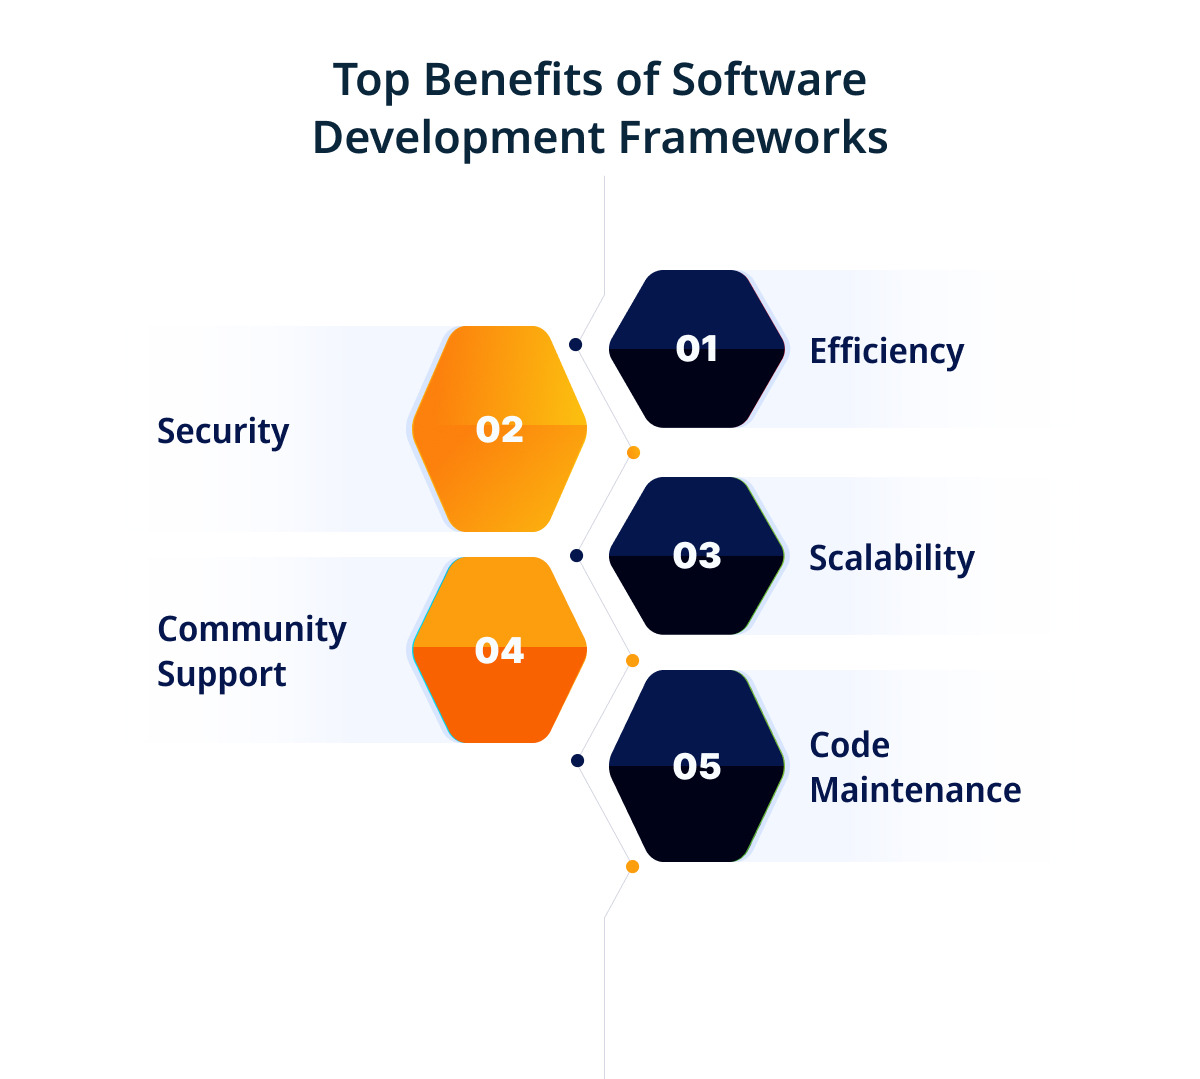 Top Benefits of Software Development Frameworks